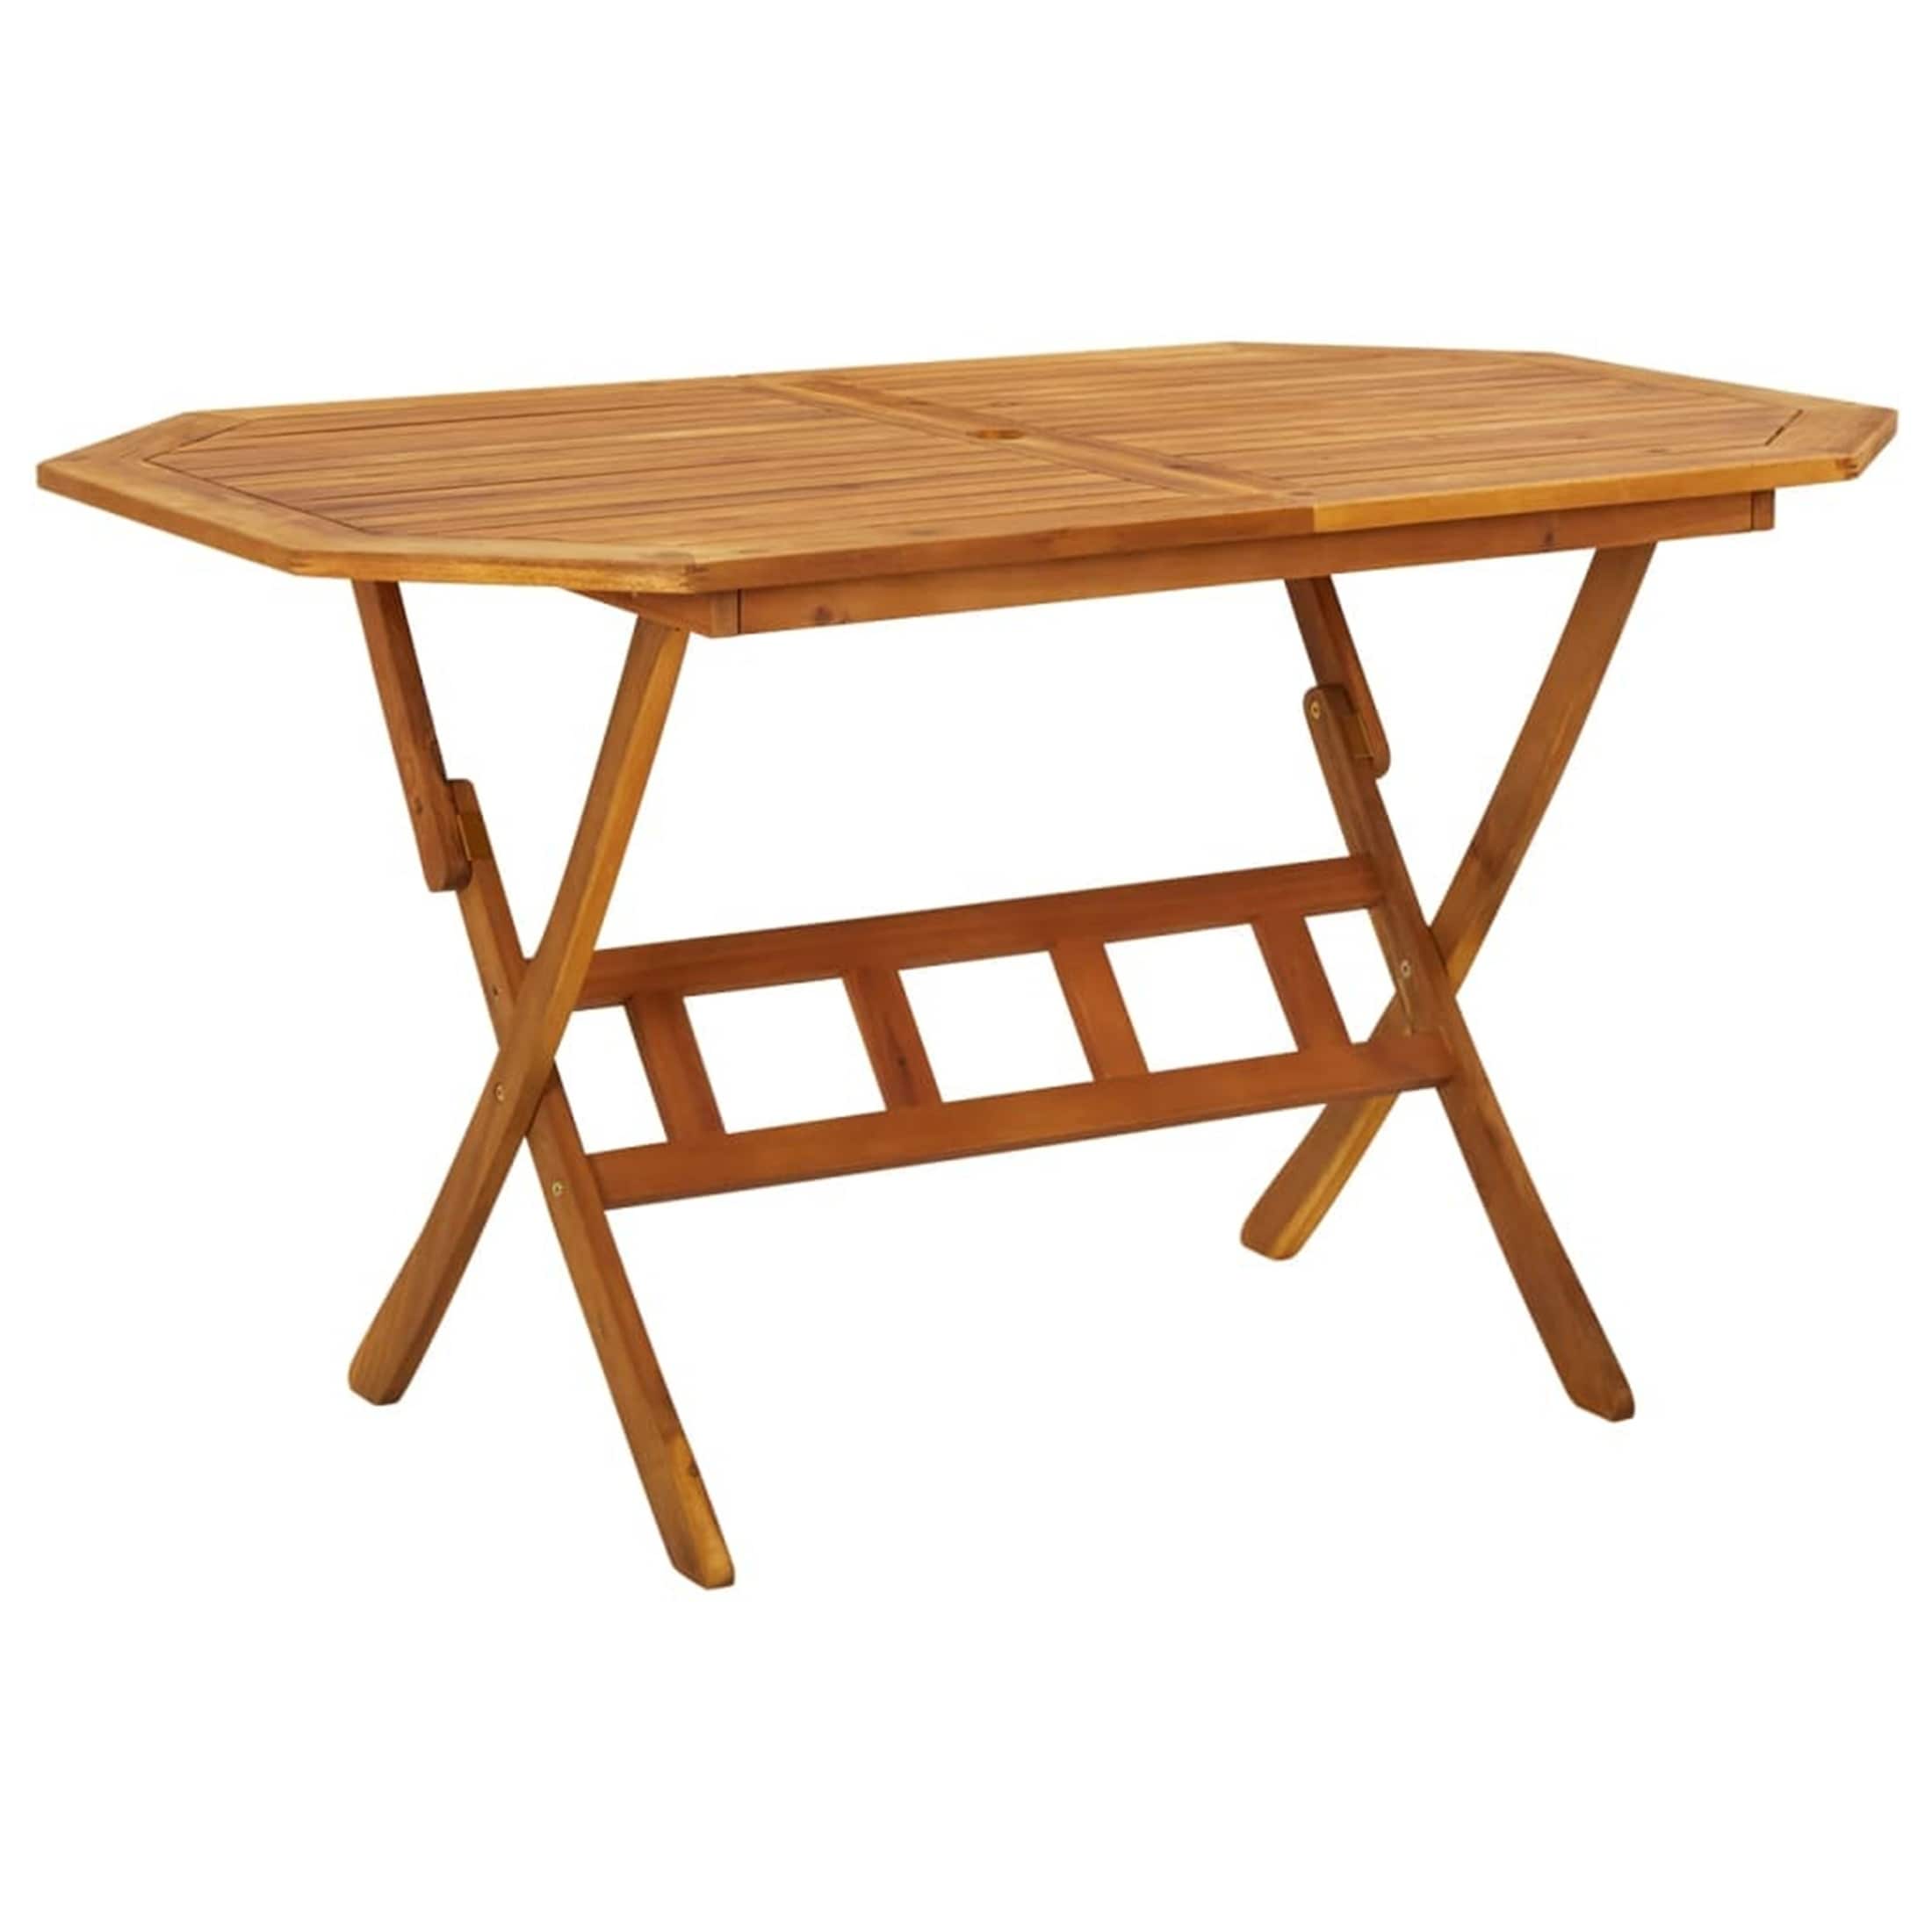 L x W x H Tidyard Folding Bistro Table Acacia Wood Bar Table Wooden Deck Table for Balcony Garden Backyard Patio Outdoor Furniture 35.4 x 19.7 x 29.1 Inches 